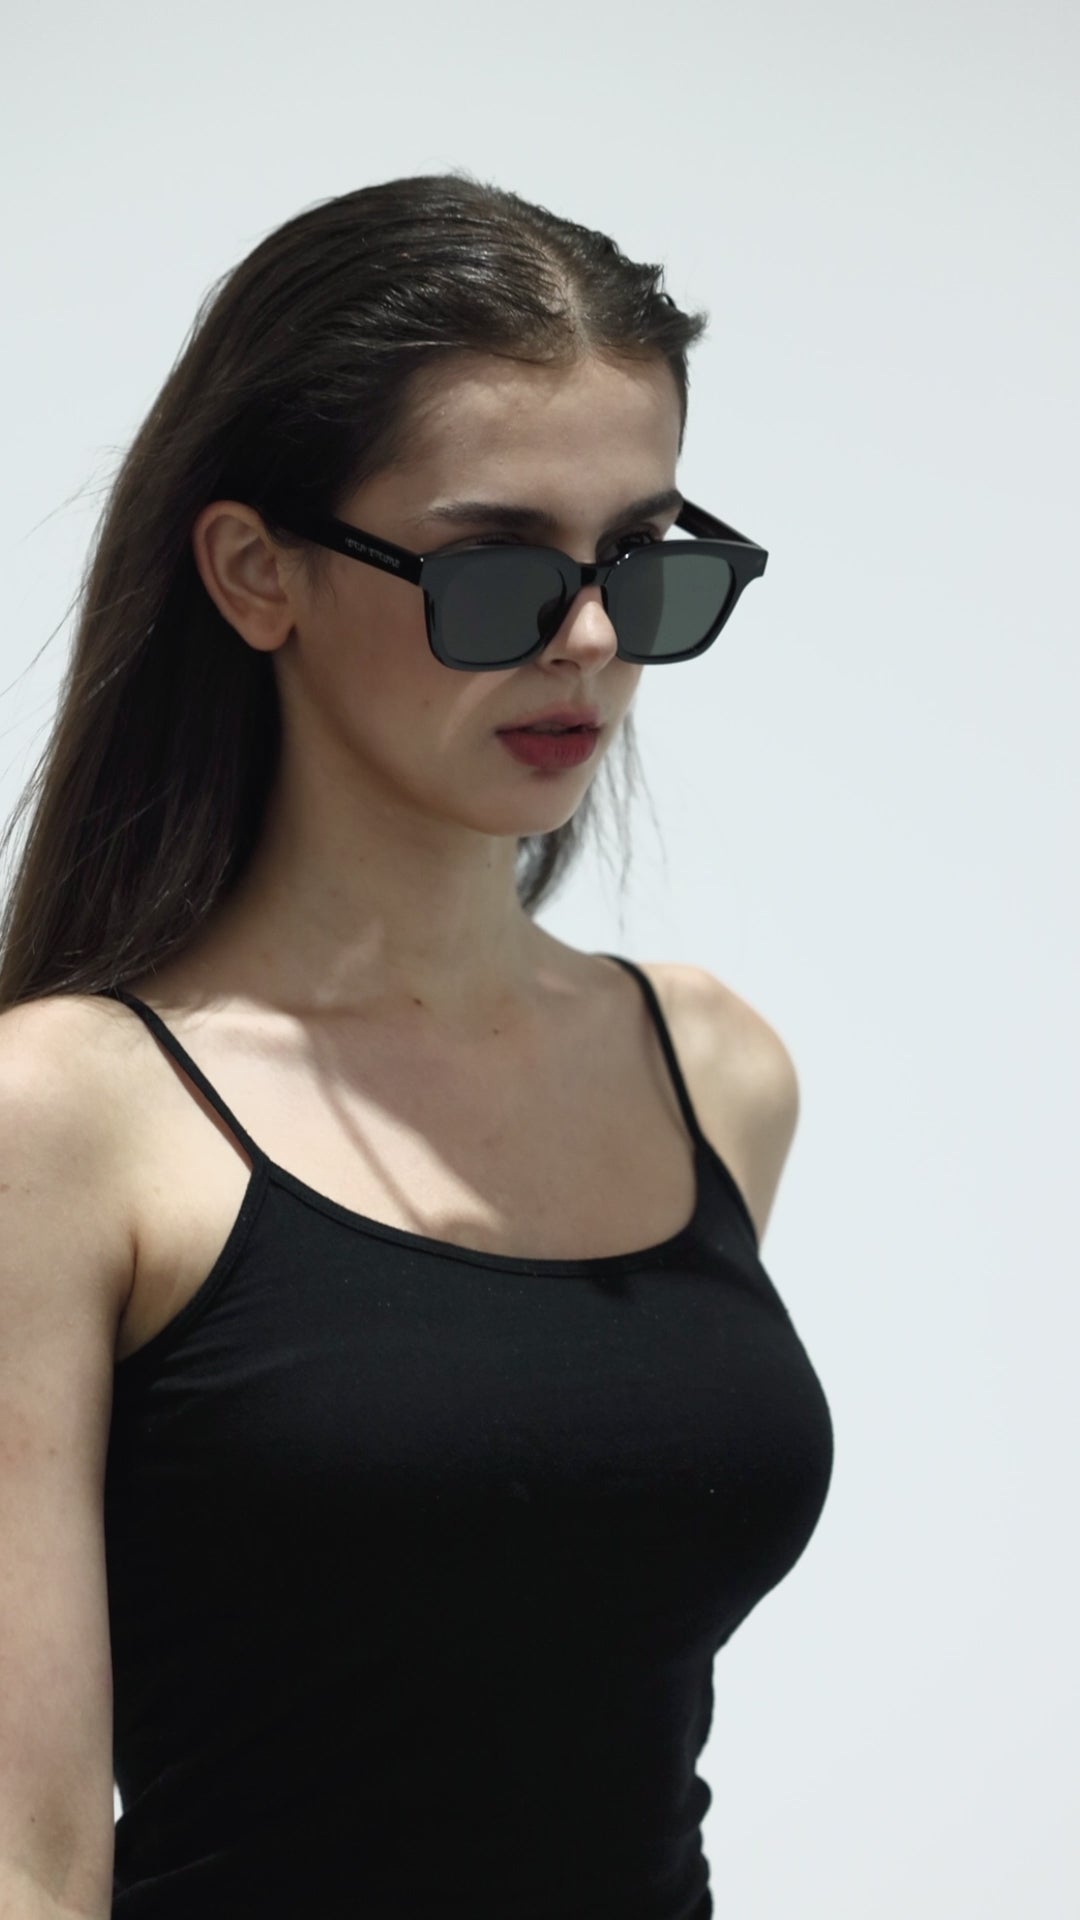 Walking model wearing Bubblegum in black square Designer Sunglasses from Mercury Retrograde Daydream collection 